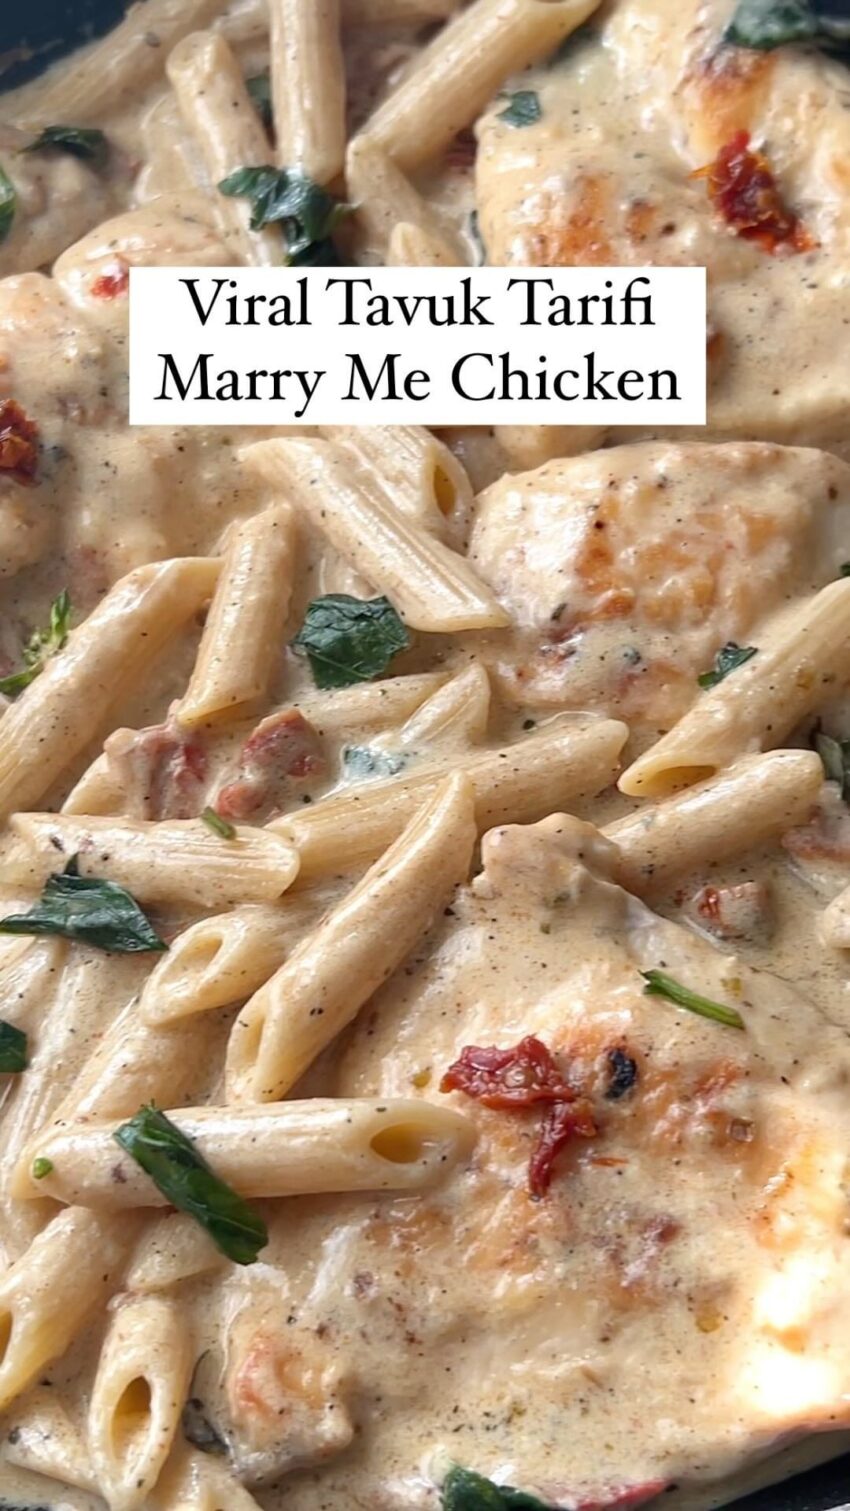 Marry Me Chicken Tarifi